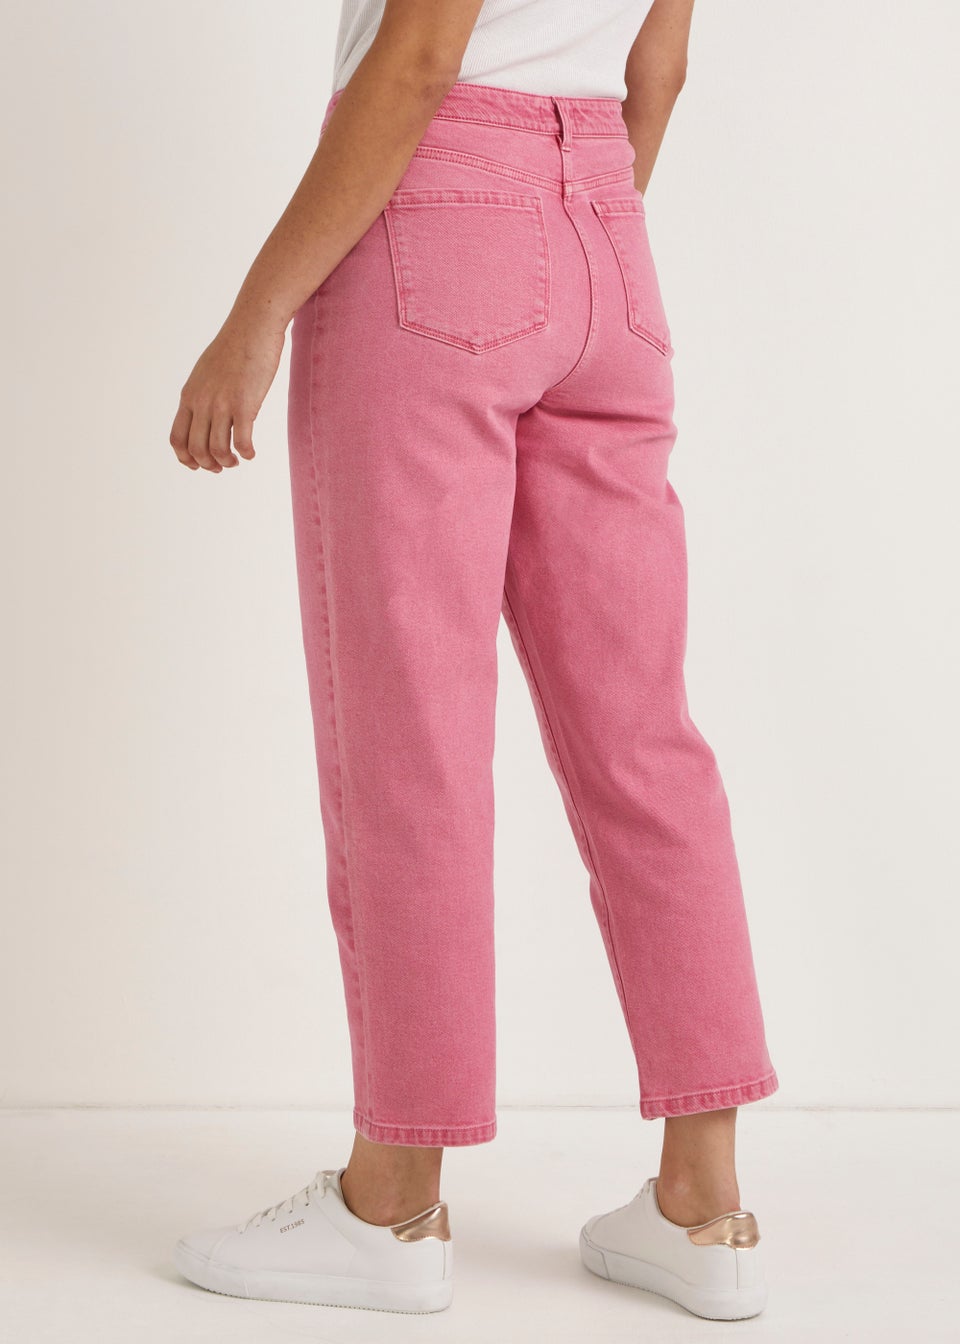 Ava Pink Mom Jeans (Long Length)